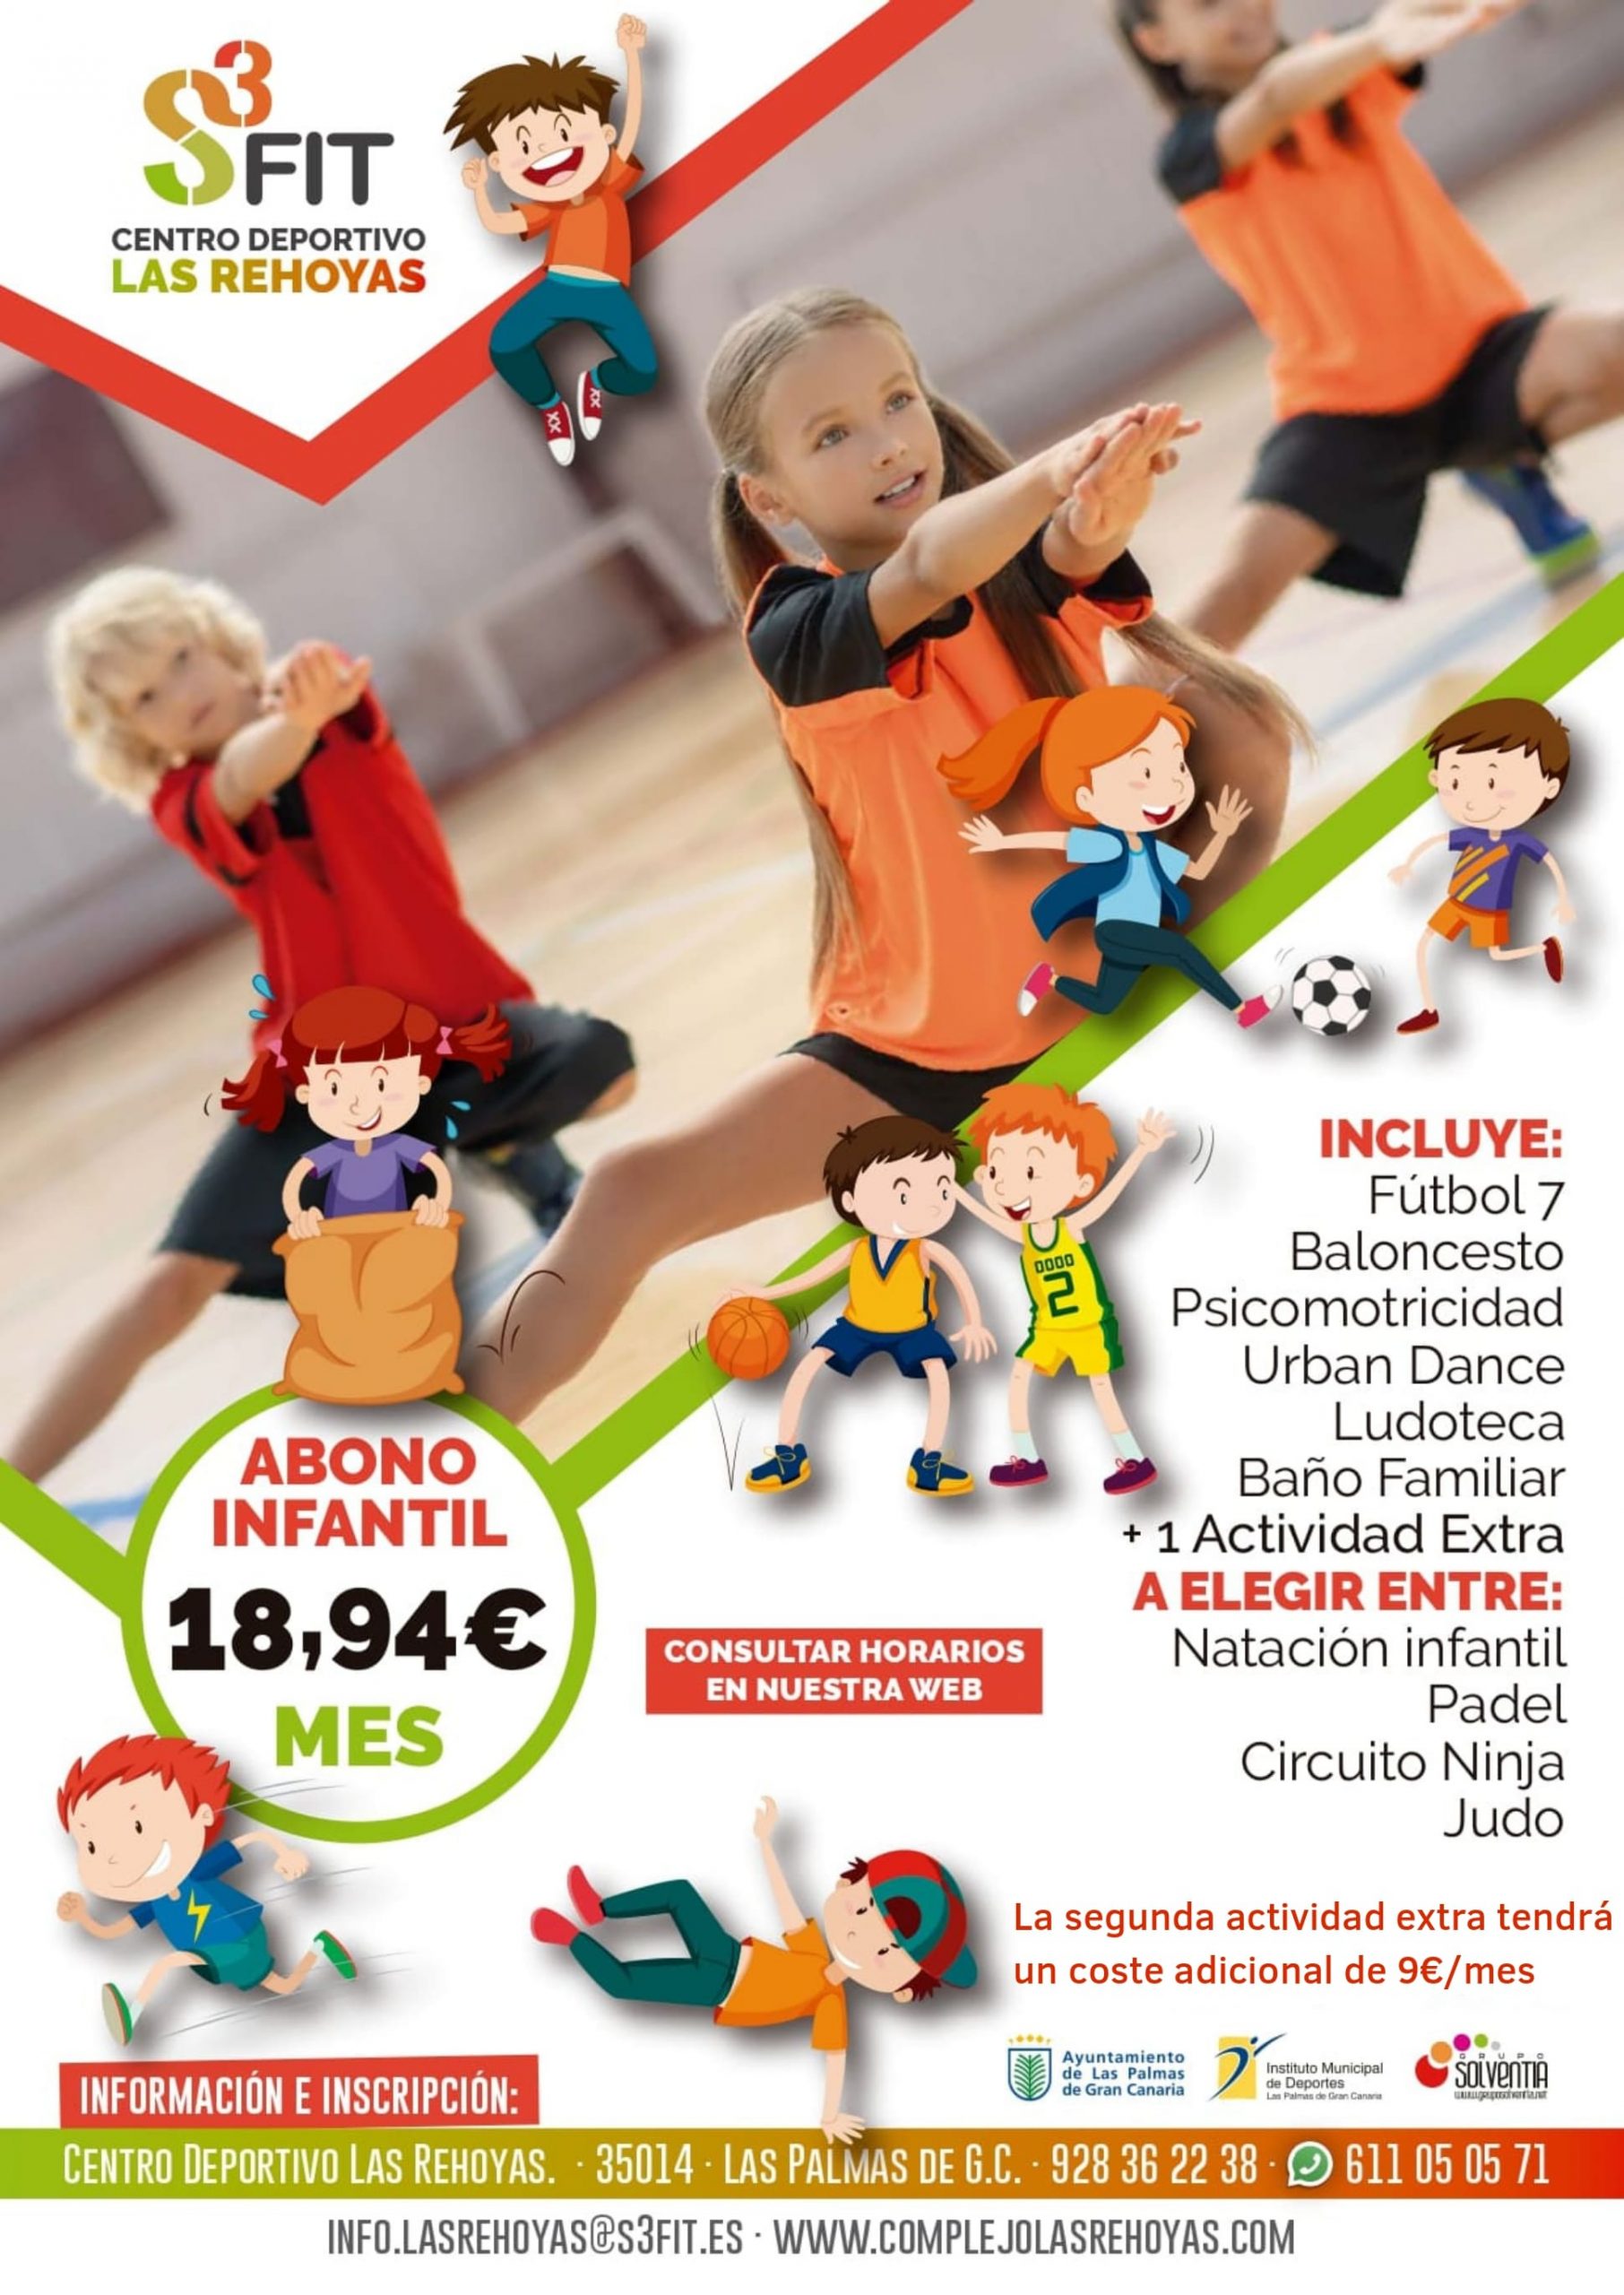 Abono Infantil Centro deportivo Las Rehoyas en Las Palmas